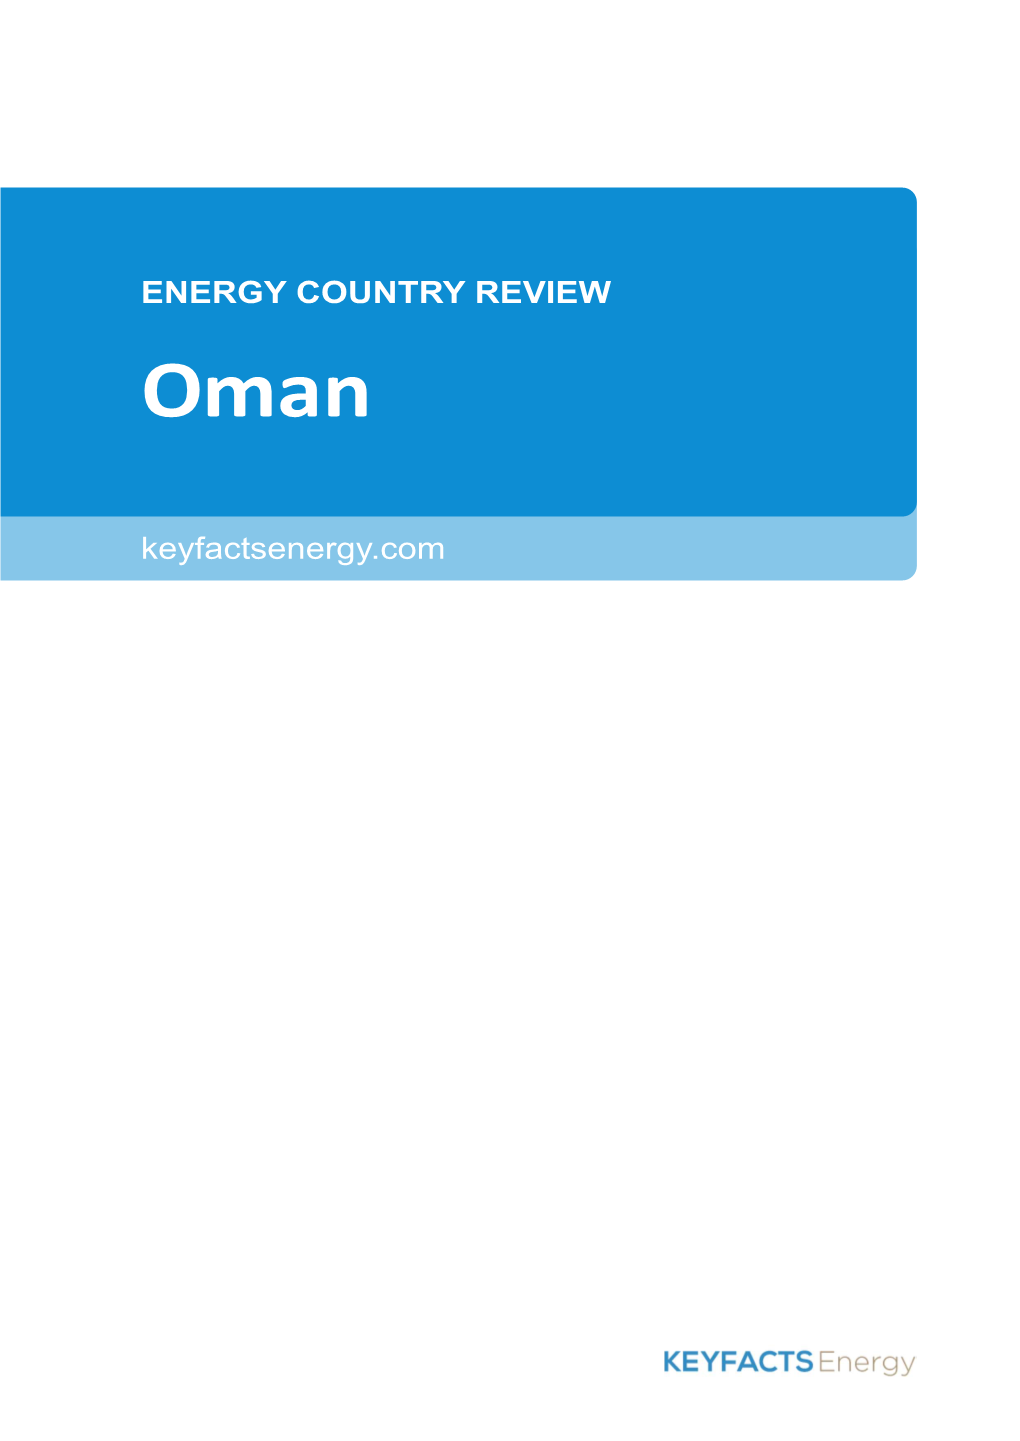 ENERGY COUNTRY REVIEW Keyfactsenergy.Com